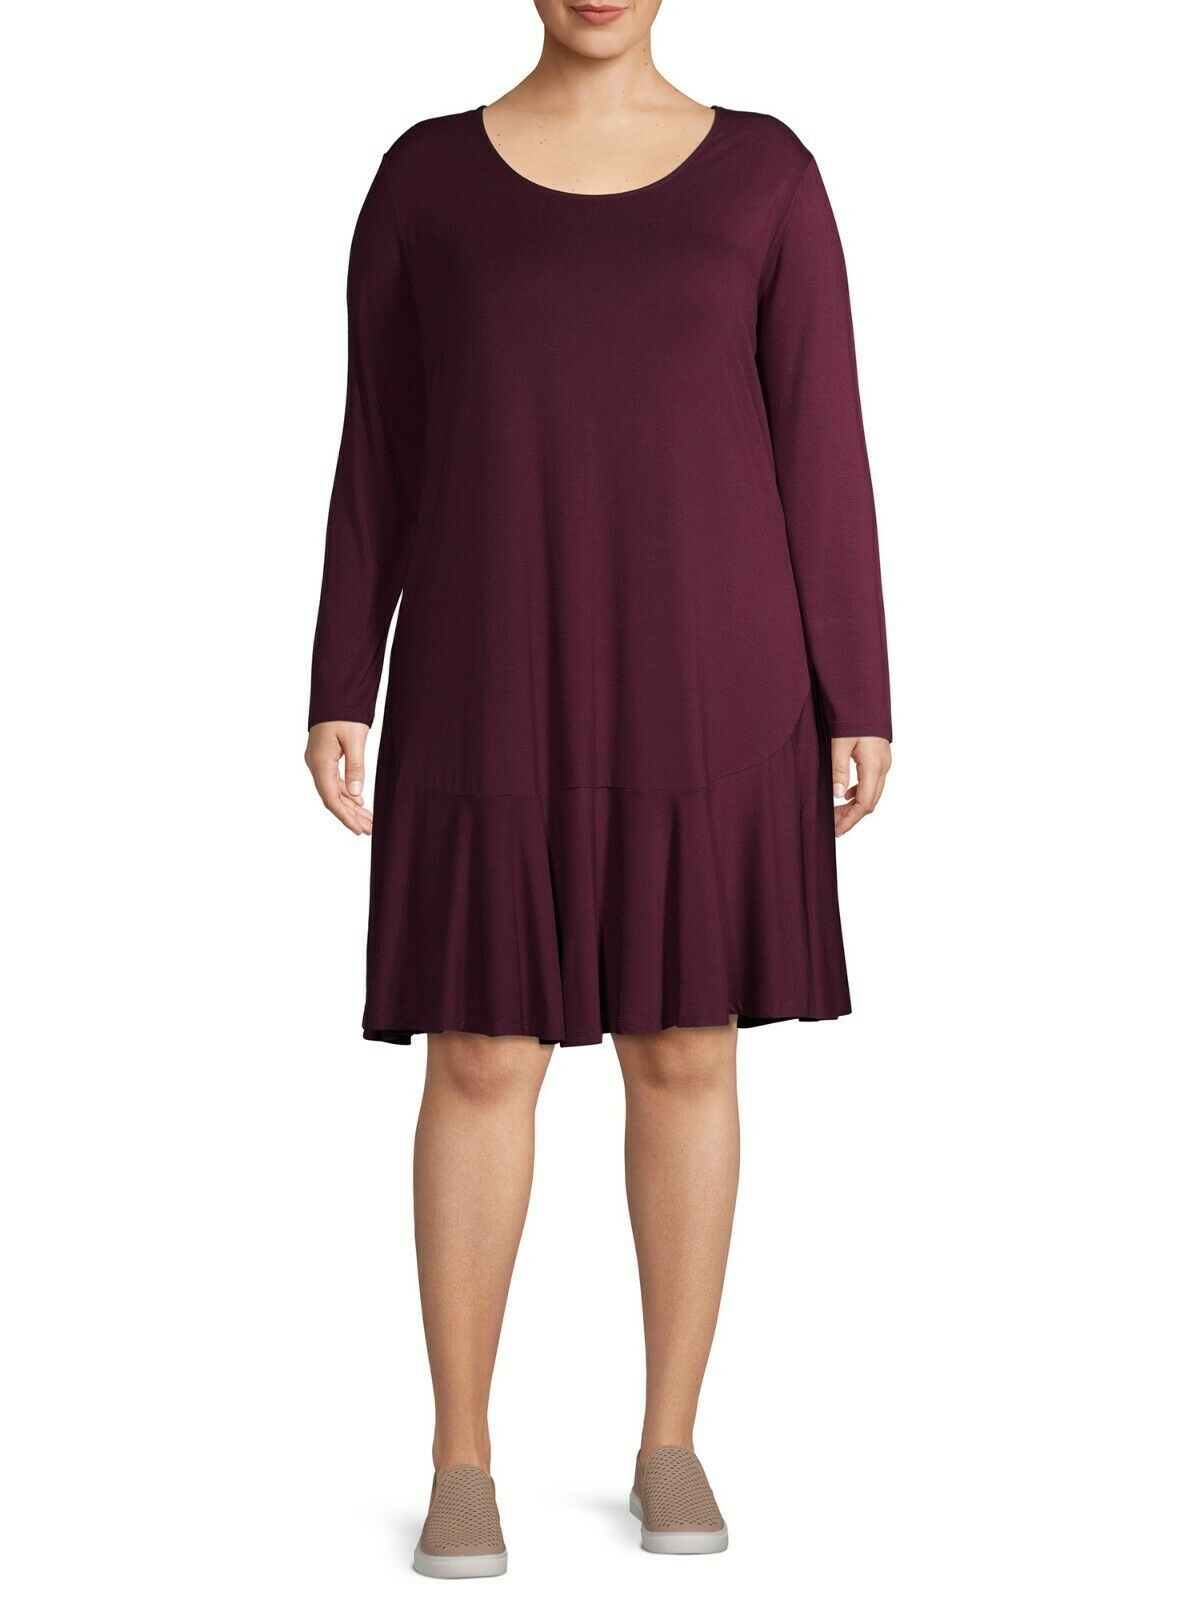 Terra & Sky Women's Plus Knit Peplum Dress 3X (24-26W) Wine Fusion Purple NEW